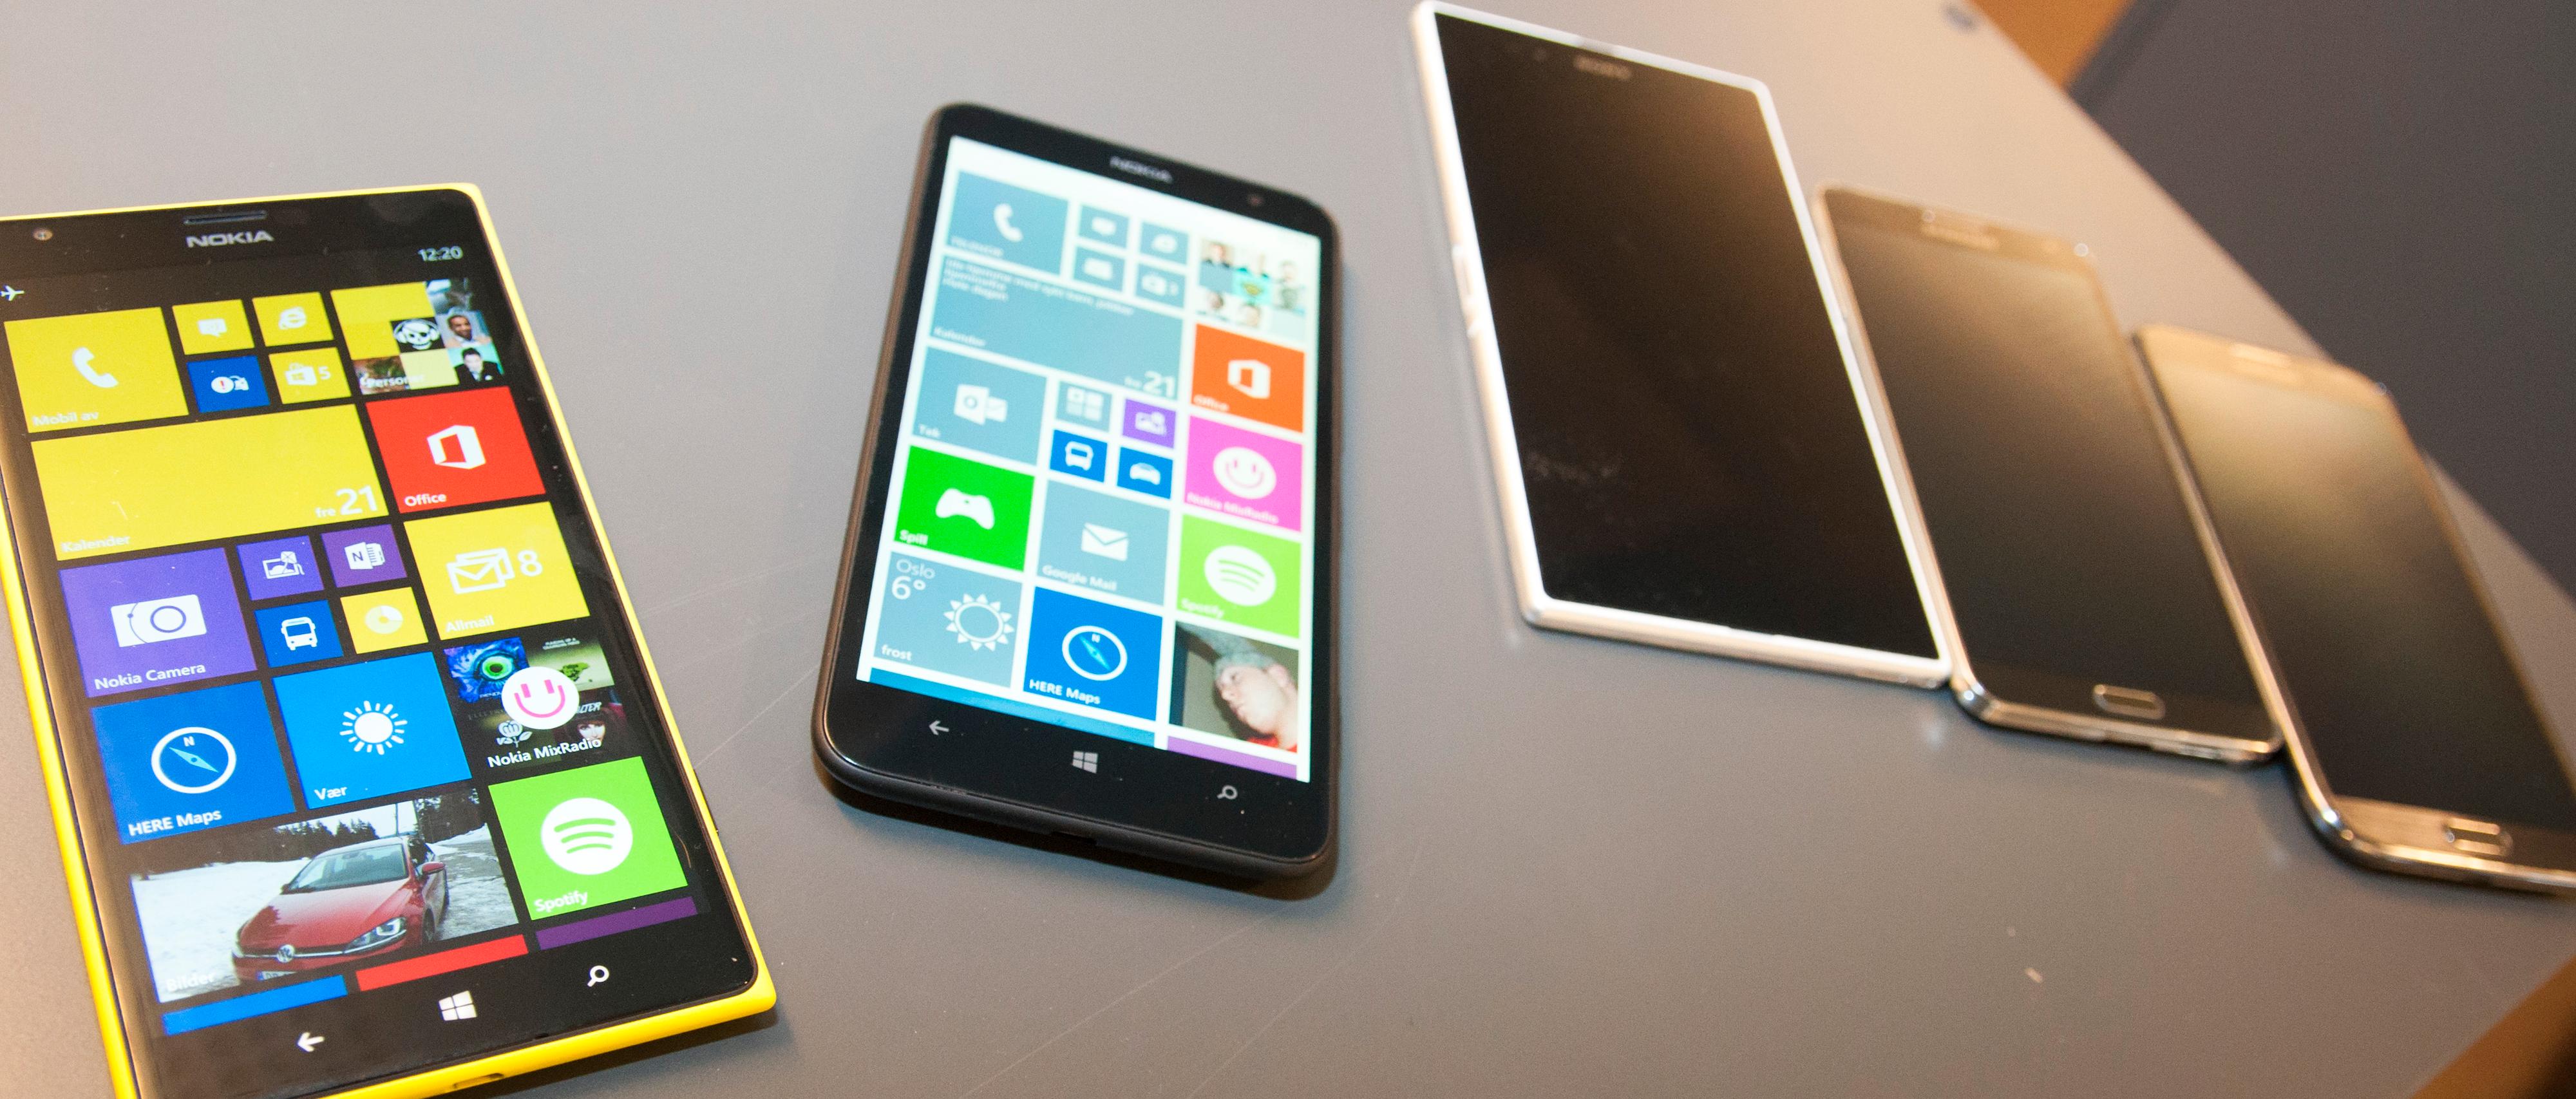 Det fins flere konkurrenter til Lumia 1320, men så godt som alle er dyrere. Fra venstre: Nokia Lumia 1320, Lumia 1520, Sony Xperia Z Ultra, Samsung Galaxy Note 3, og Galaxy Note 2.Foto: Finn Jarle Kvalheim, Amobil.no